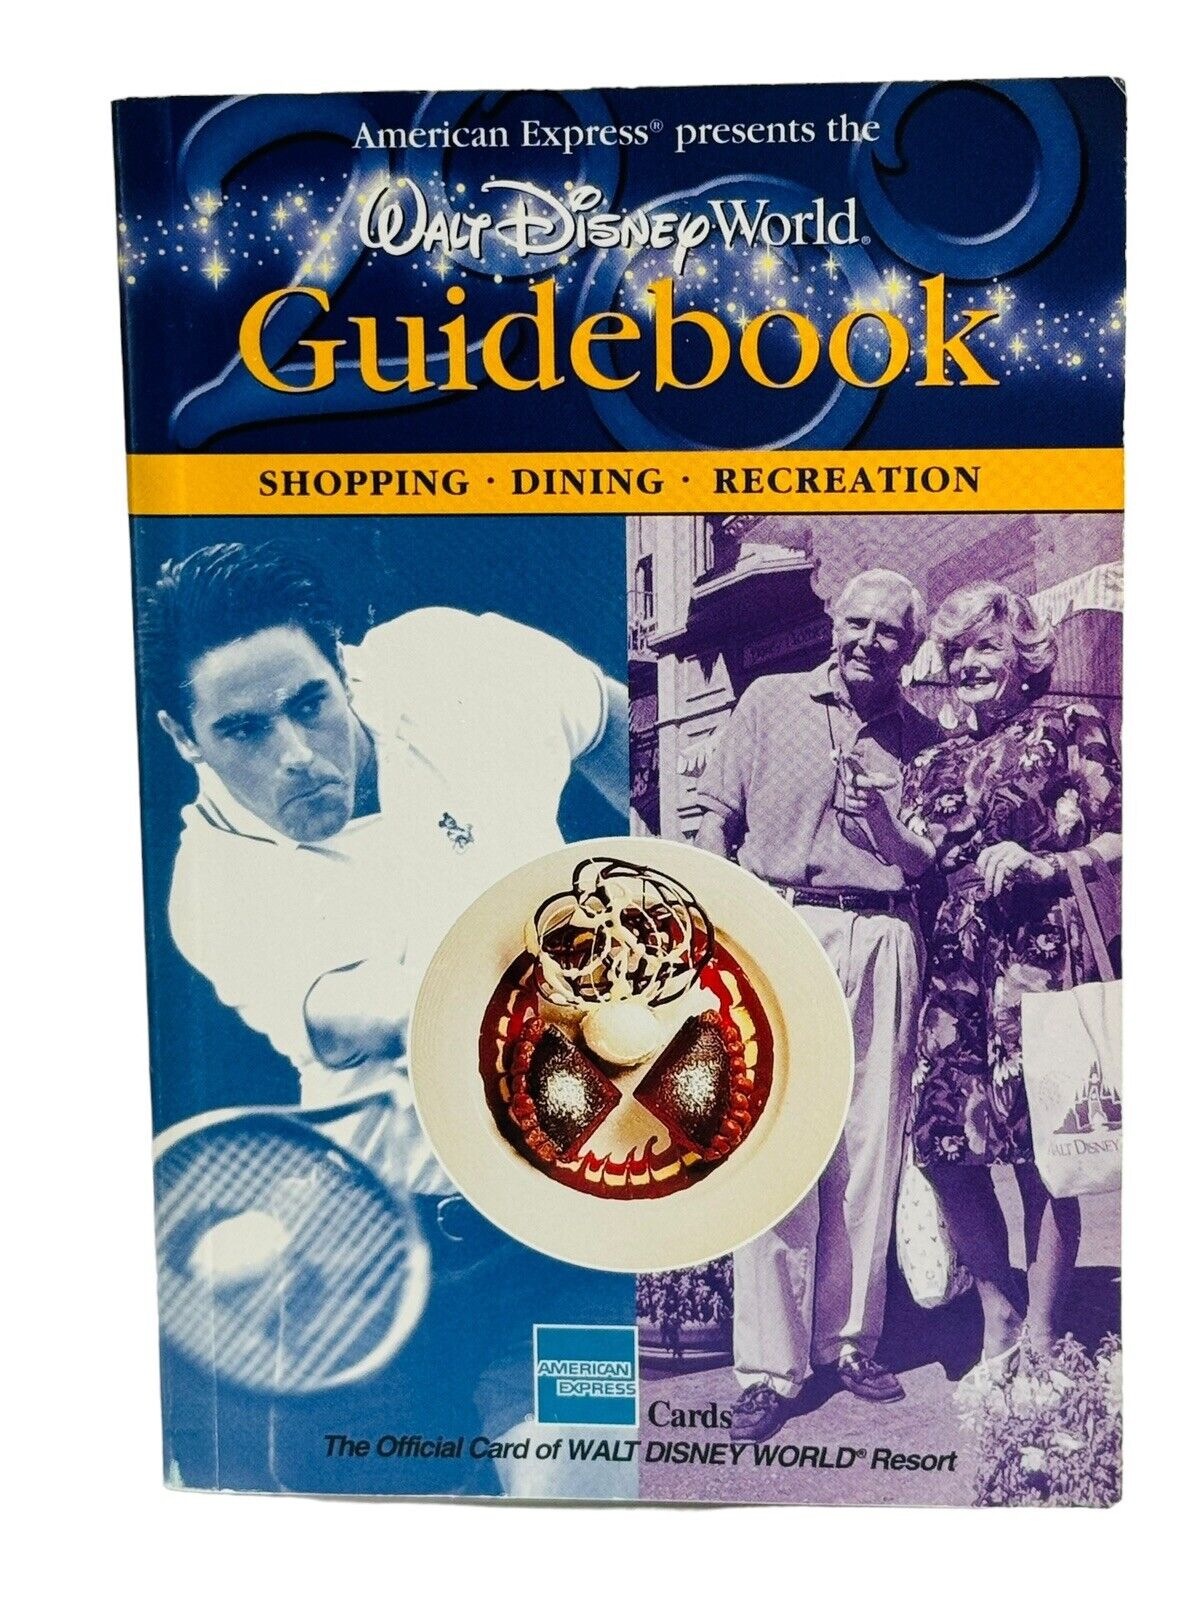 Vintage Walt Disney World Guidebook (Year 2000) Sponsored by American Express